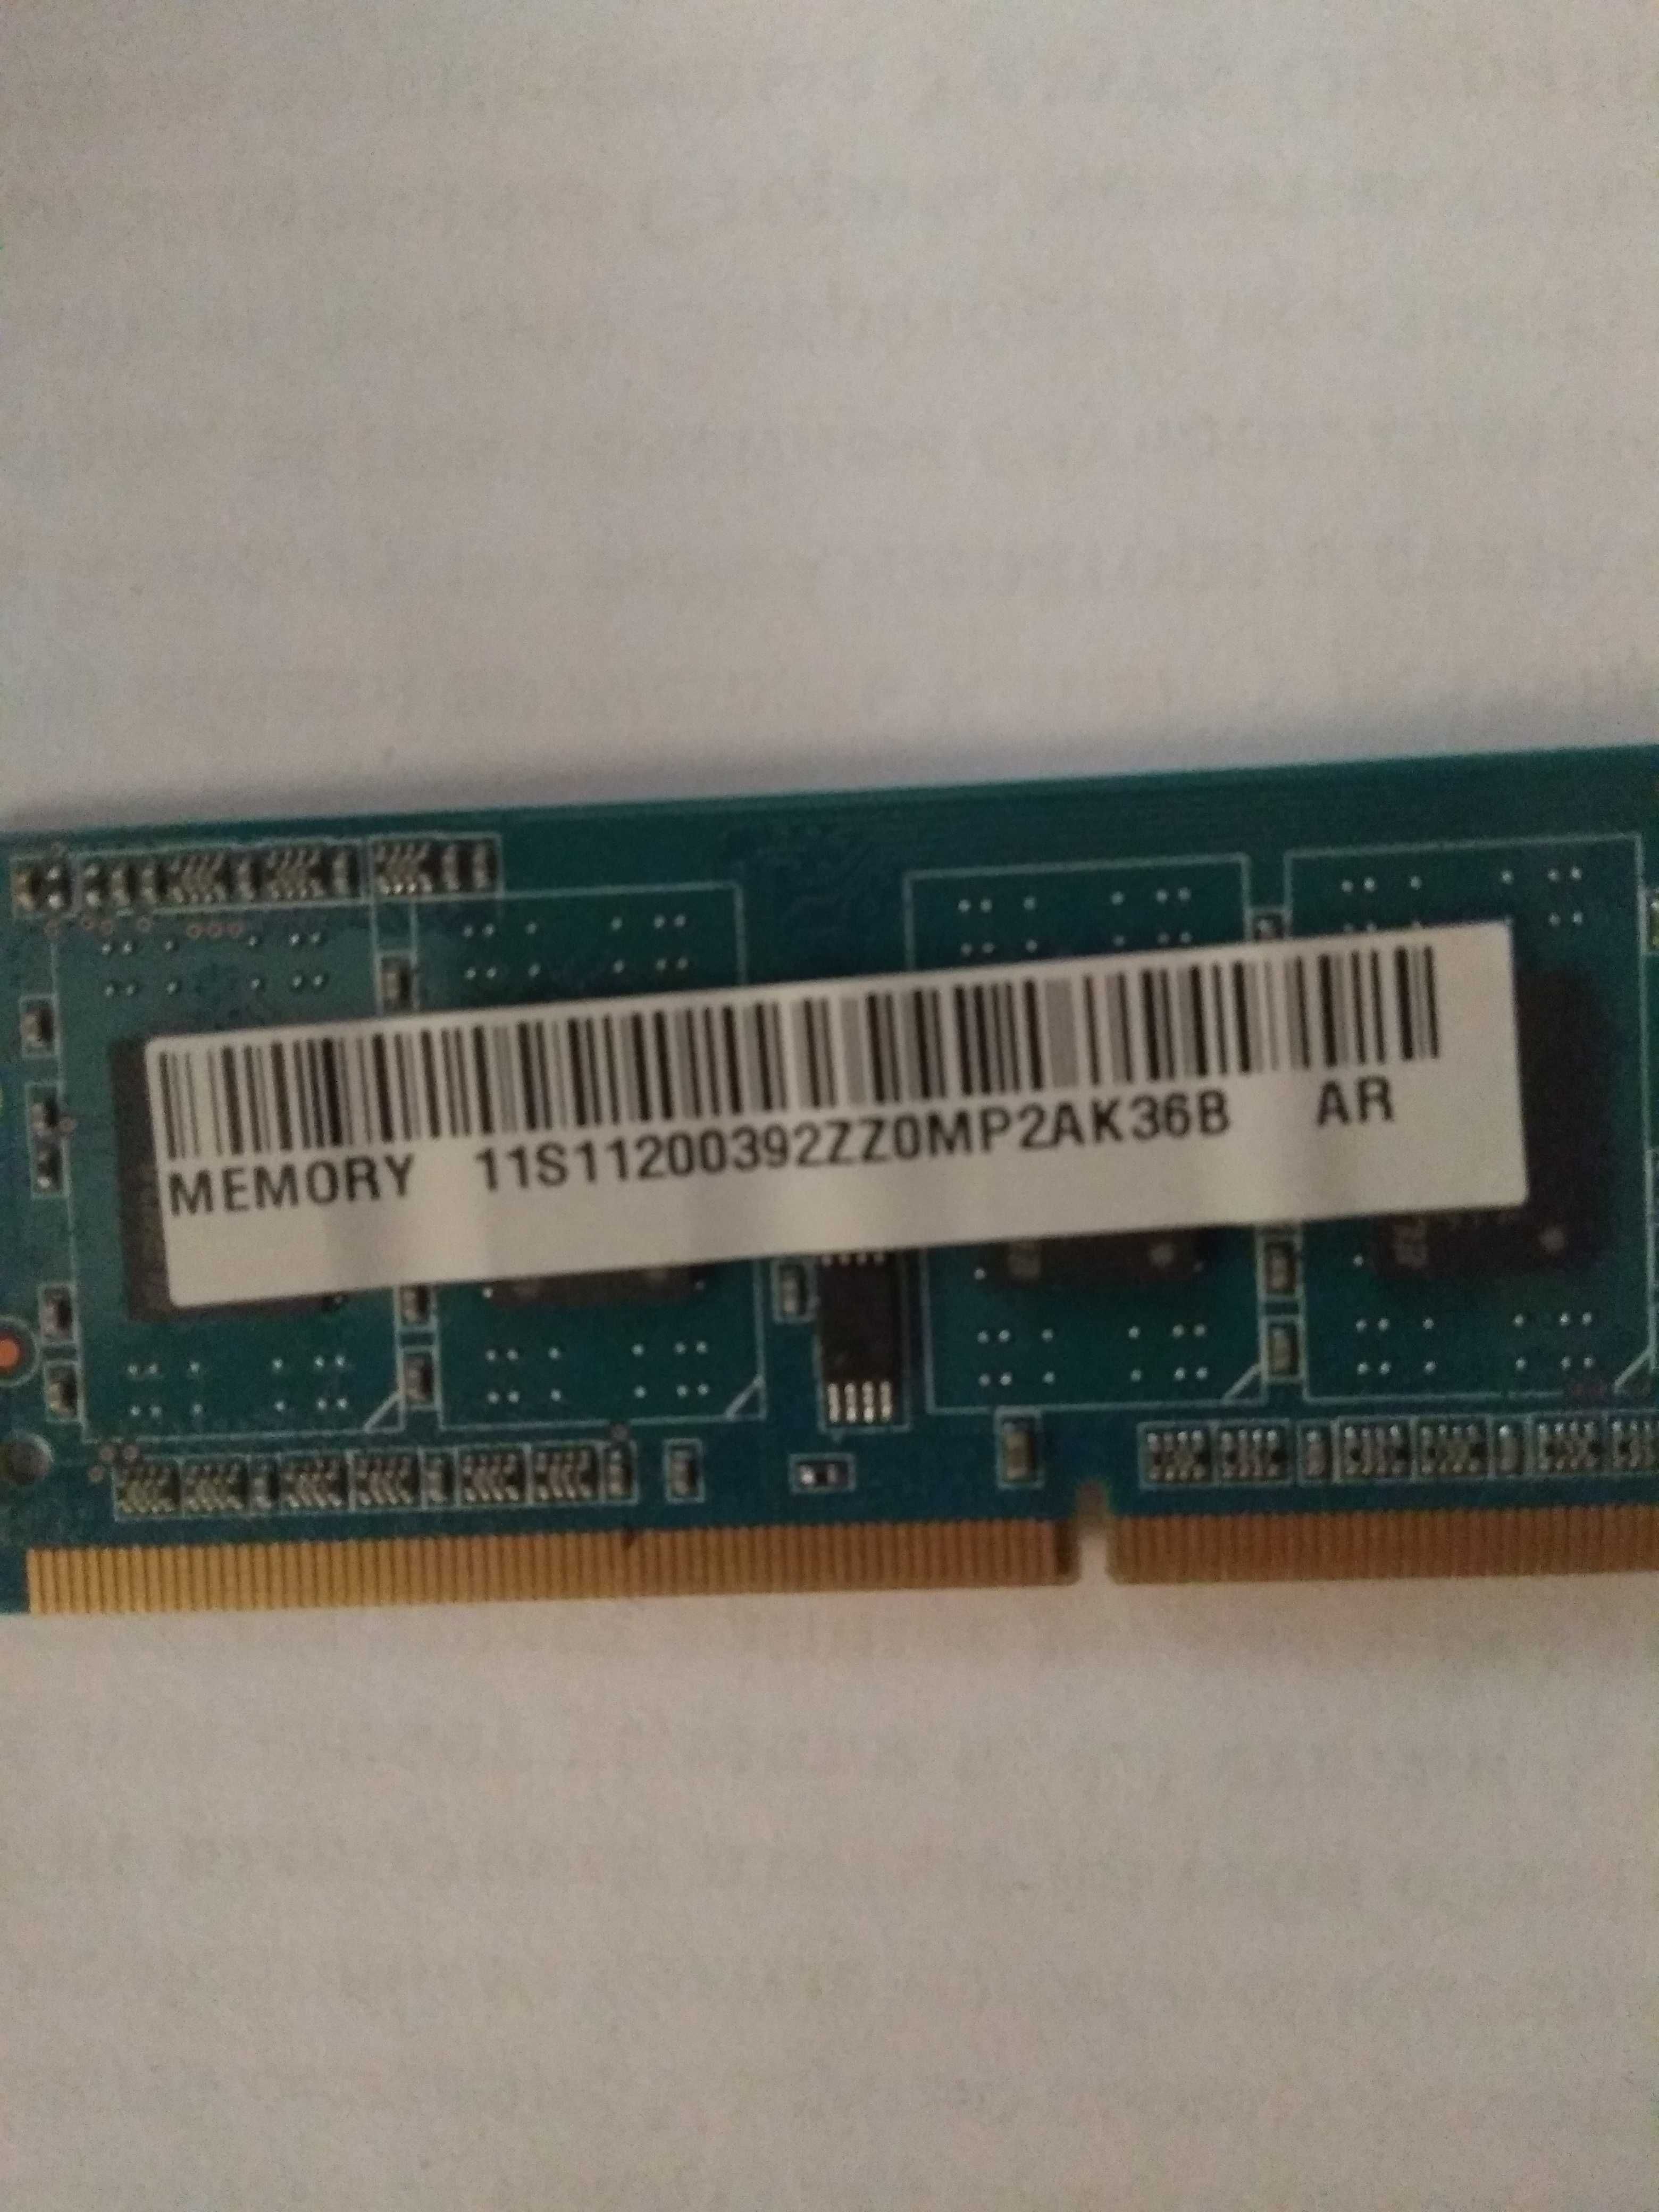 Оперативная память для ноутбука DDR3 объем памяти 2G формфактор SODIMM